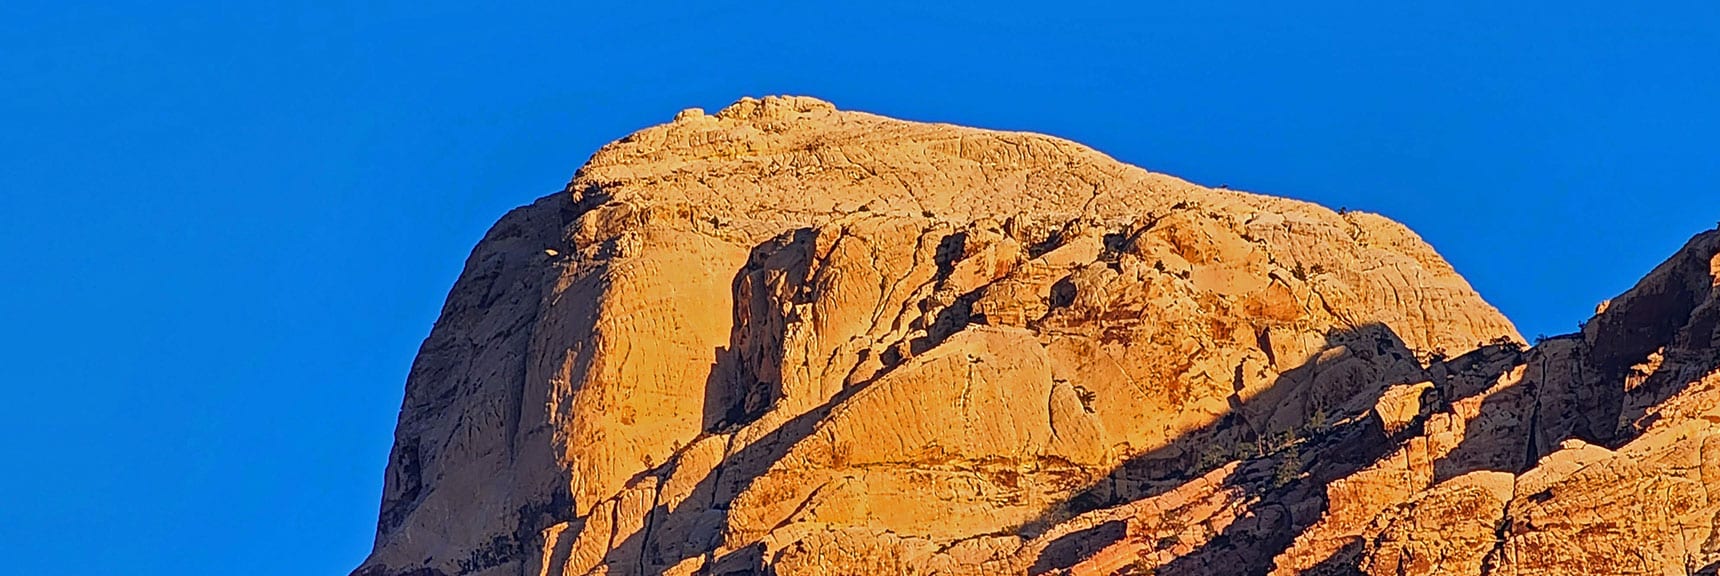 Close-up of Bridge Mt. Summit | Knoll Trail | Red Rock Canyon National Conservation Area, Nevada | David Smith | LasVegasAreaTrails.com